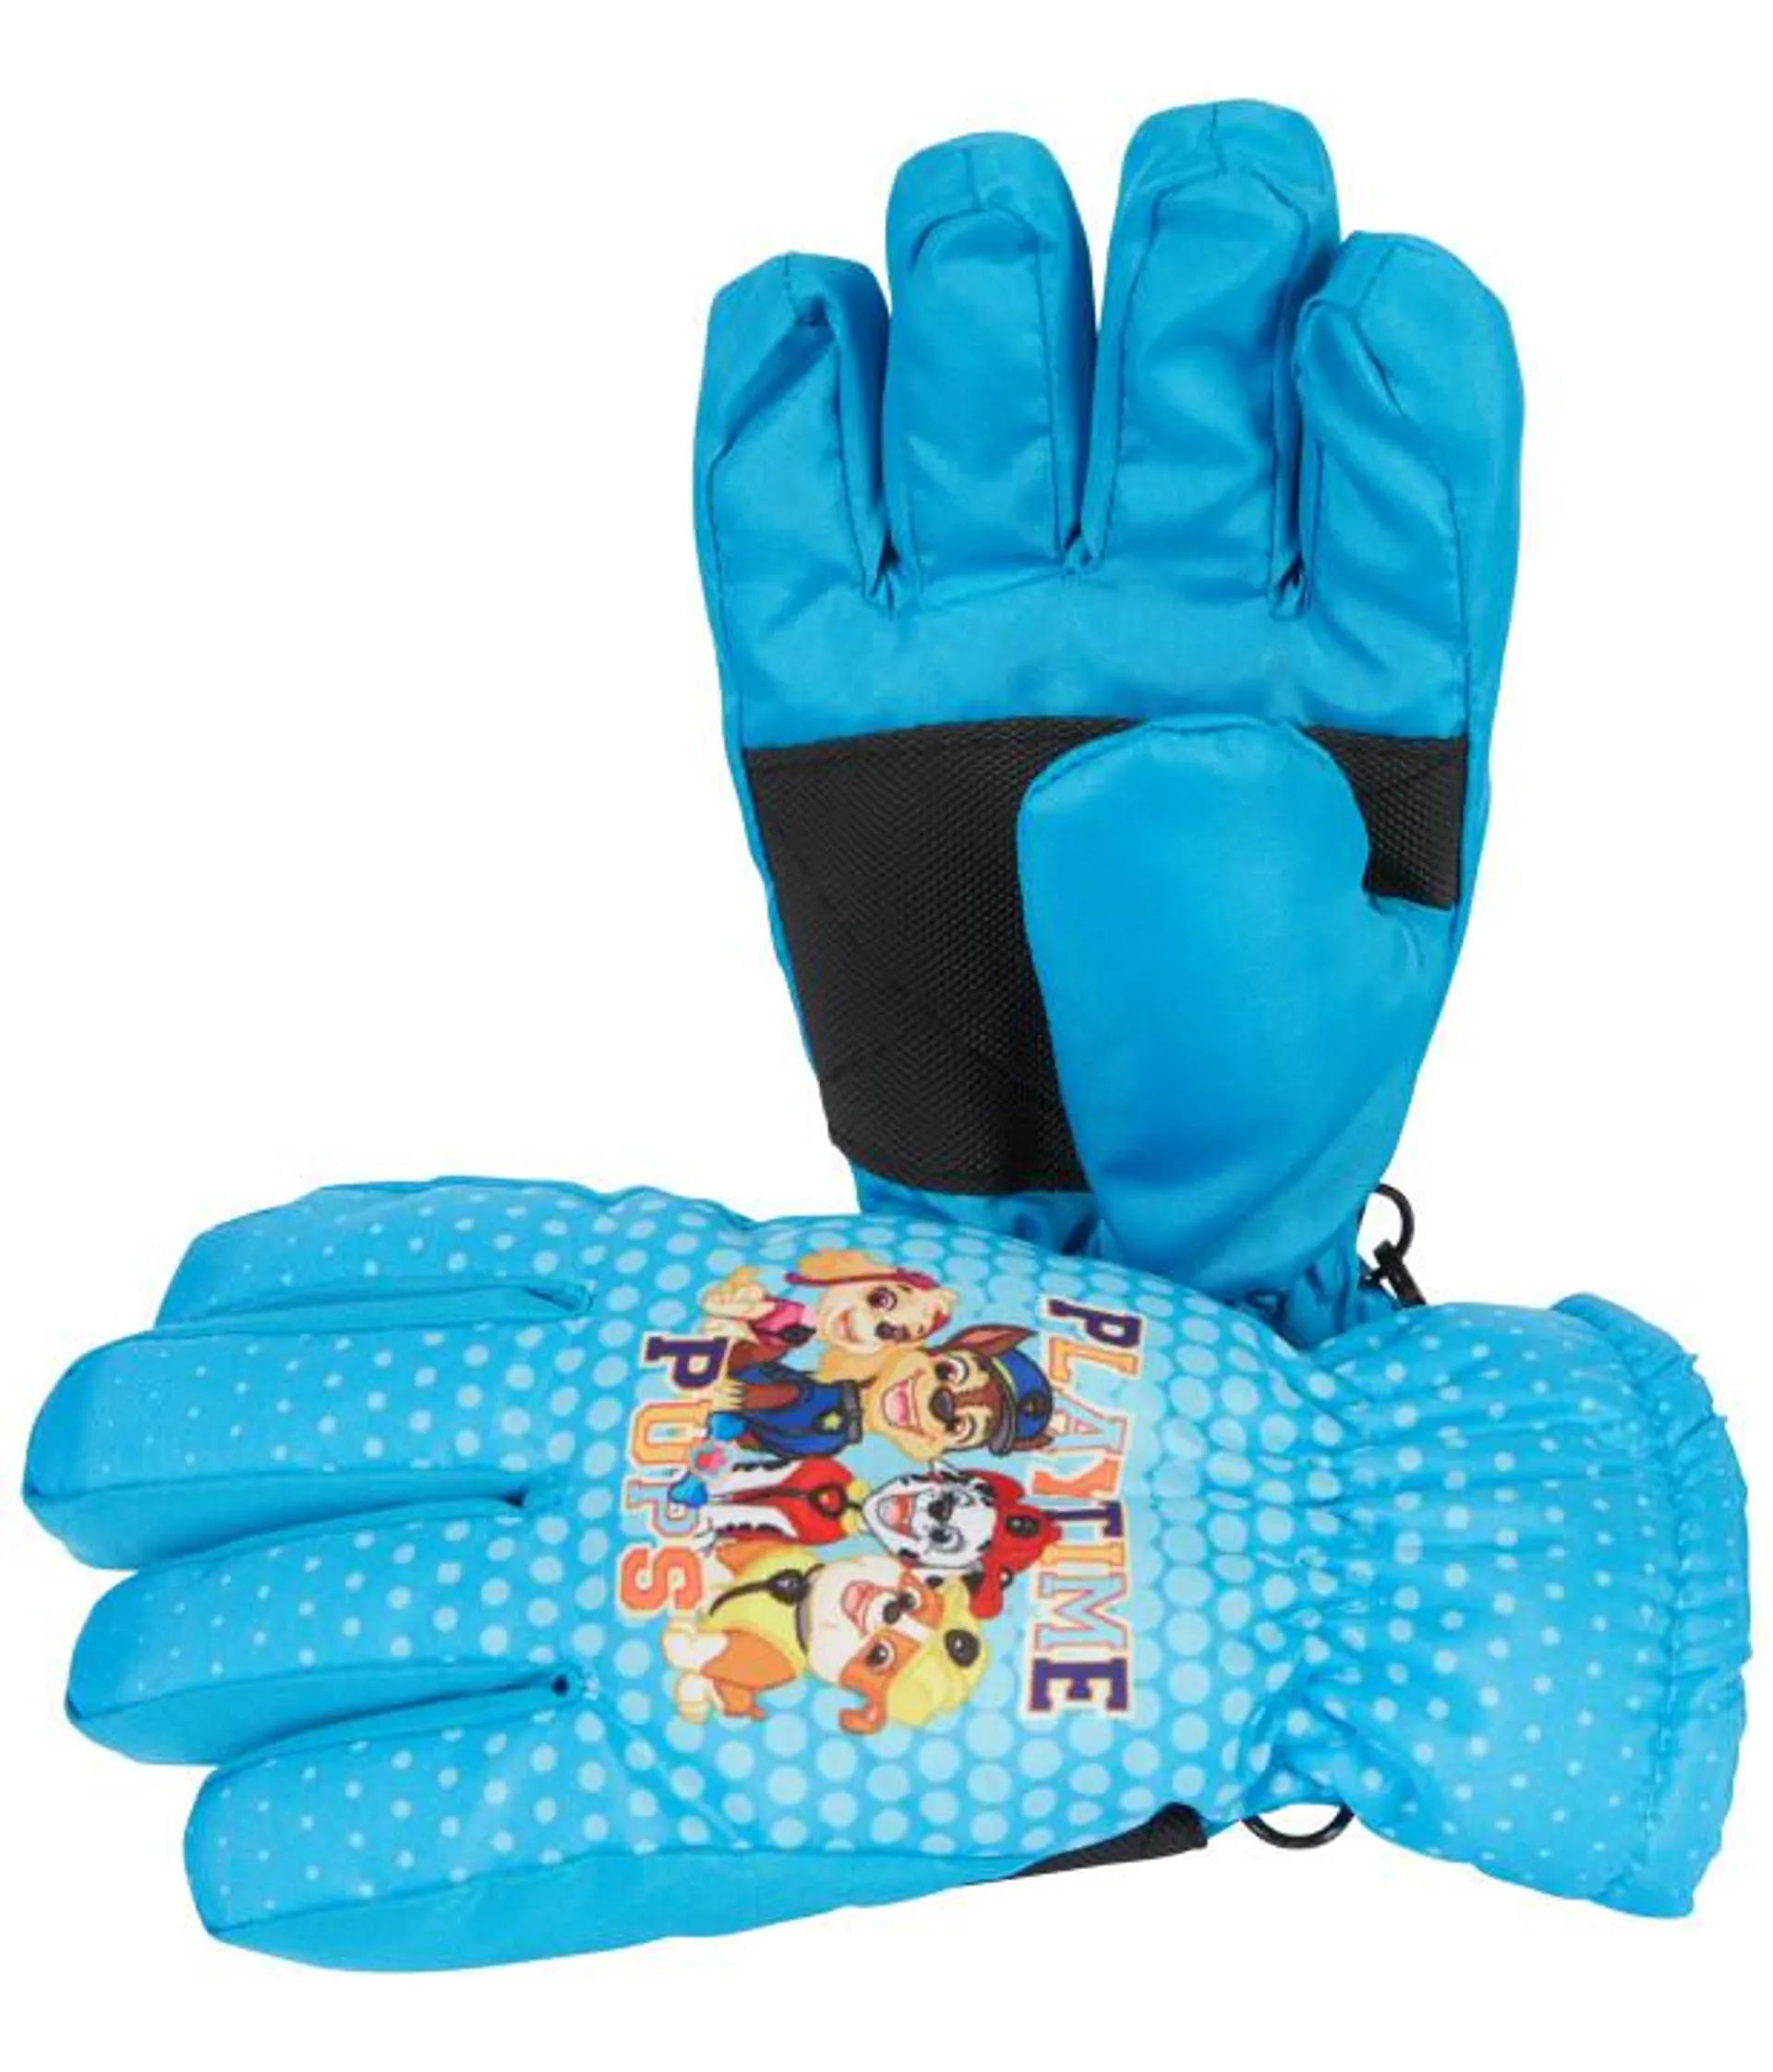 Ski-Handschuhe